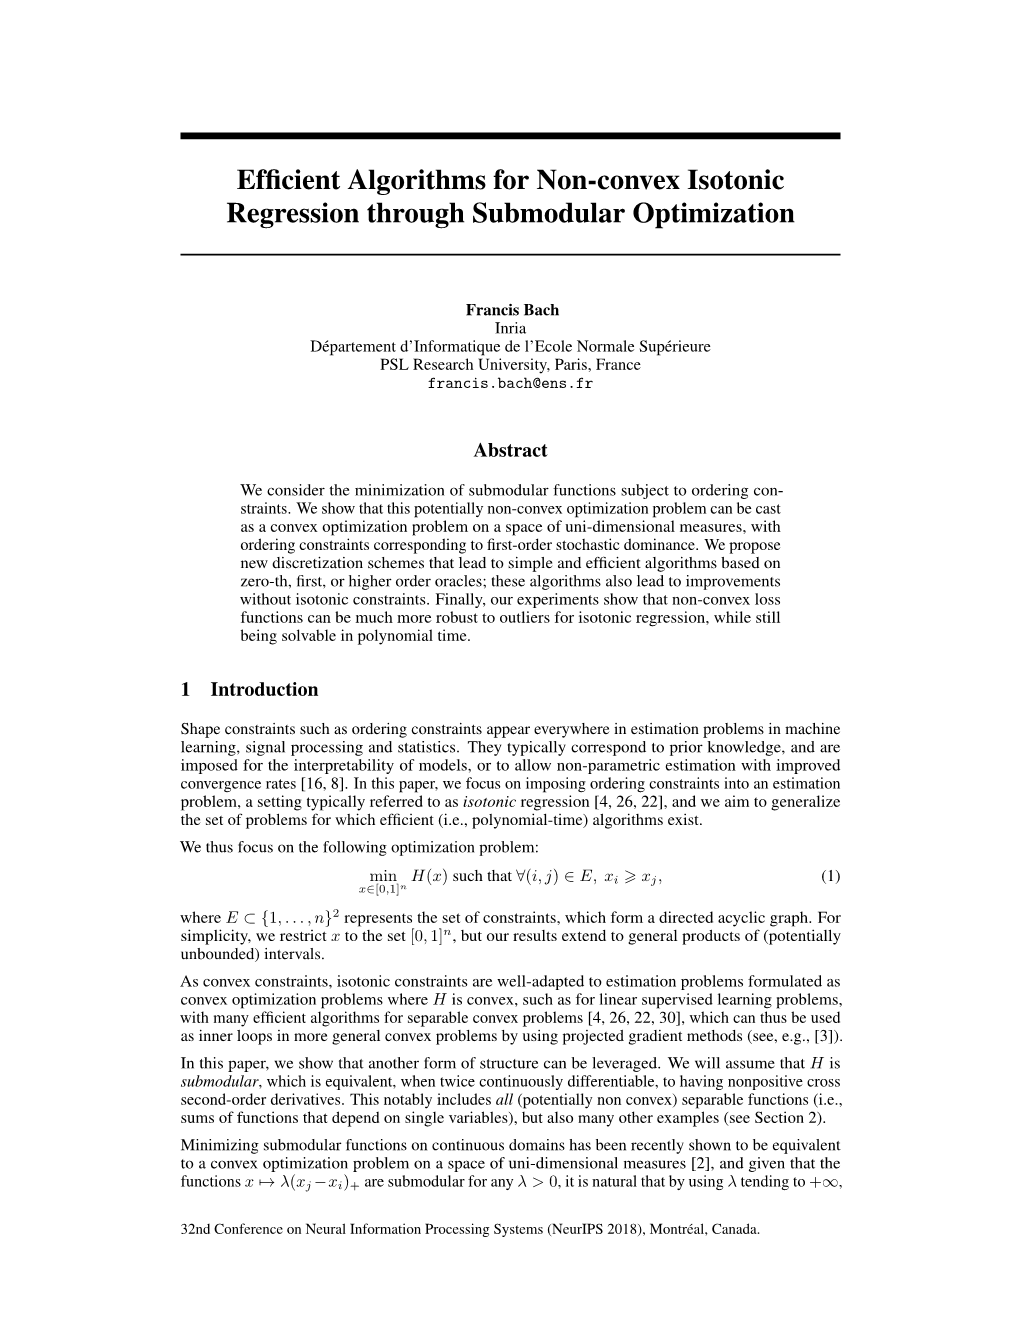 Efficient Algorithms for Non-Convex Isotonic Regression Through